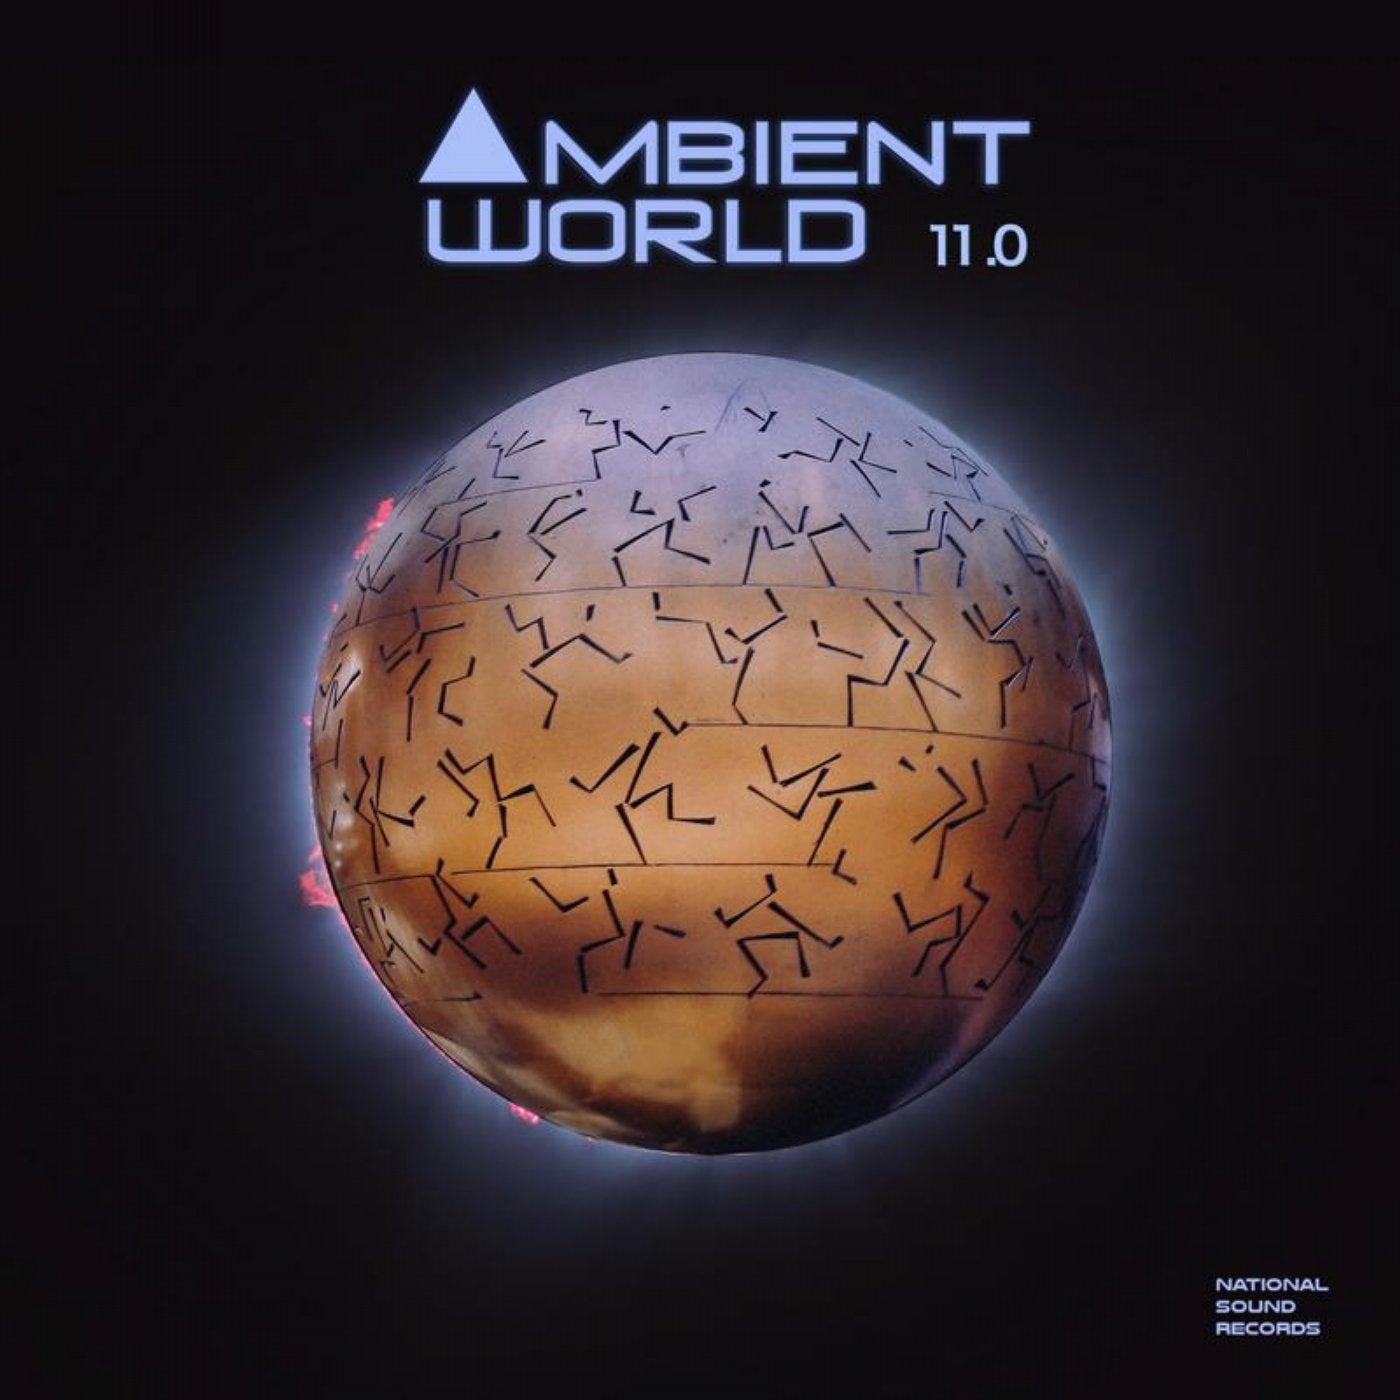 Ambient World 11.0